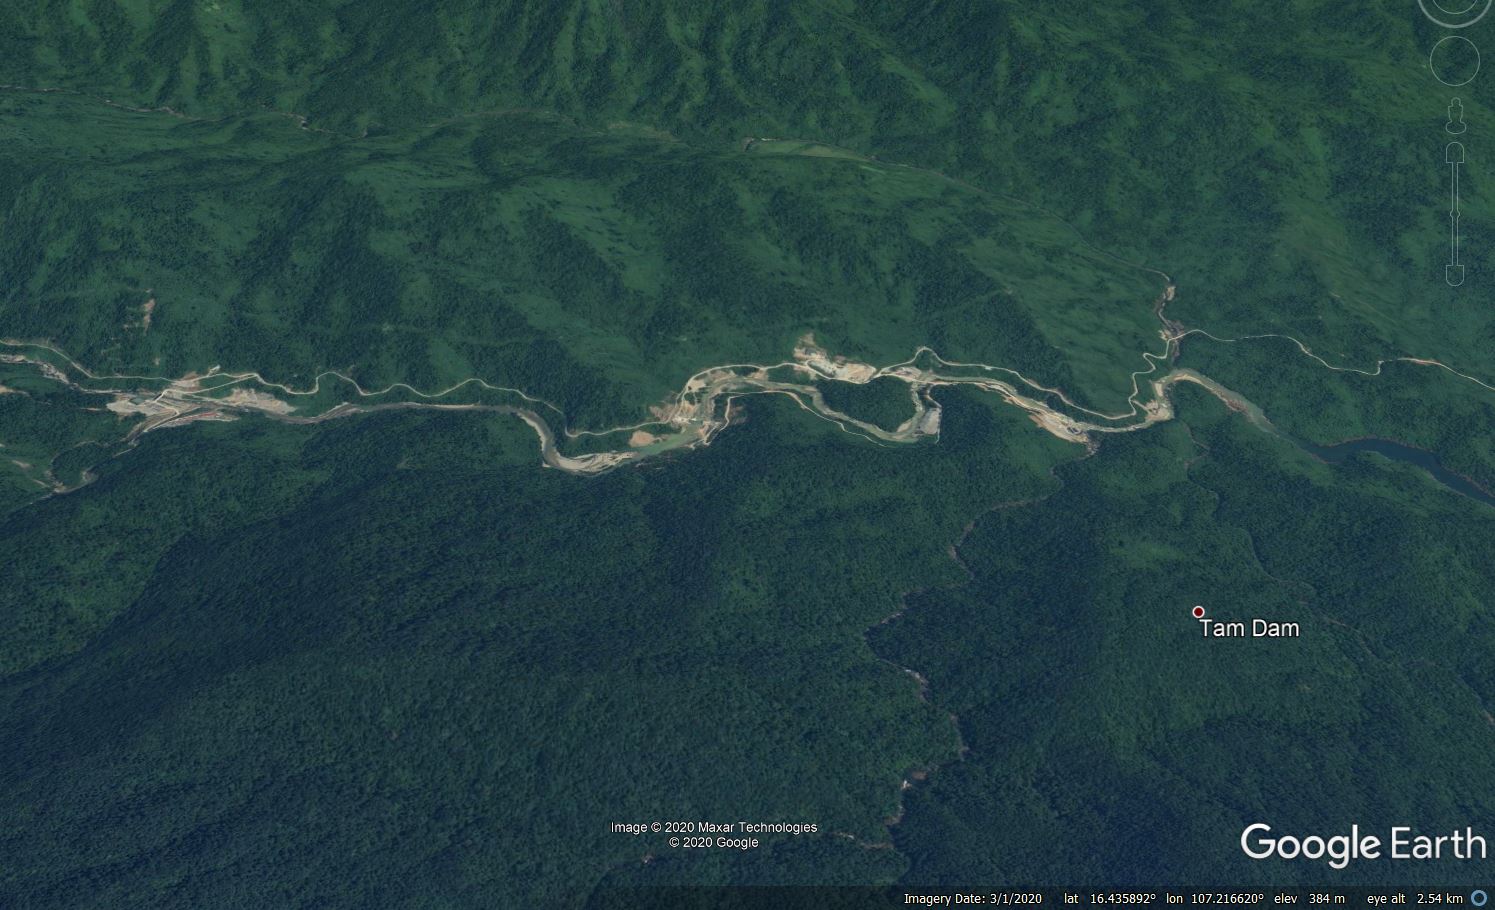 Rao Trang 3 hydropower plant